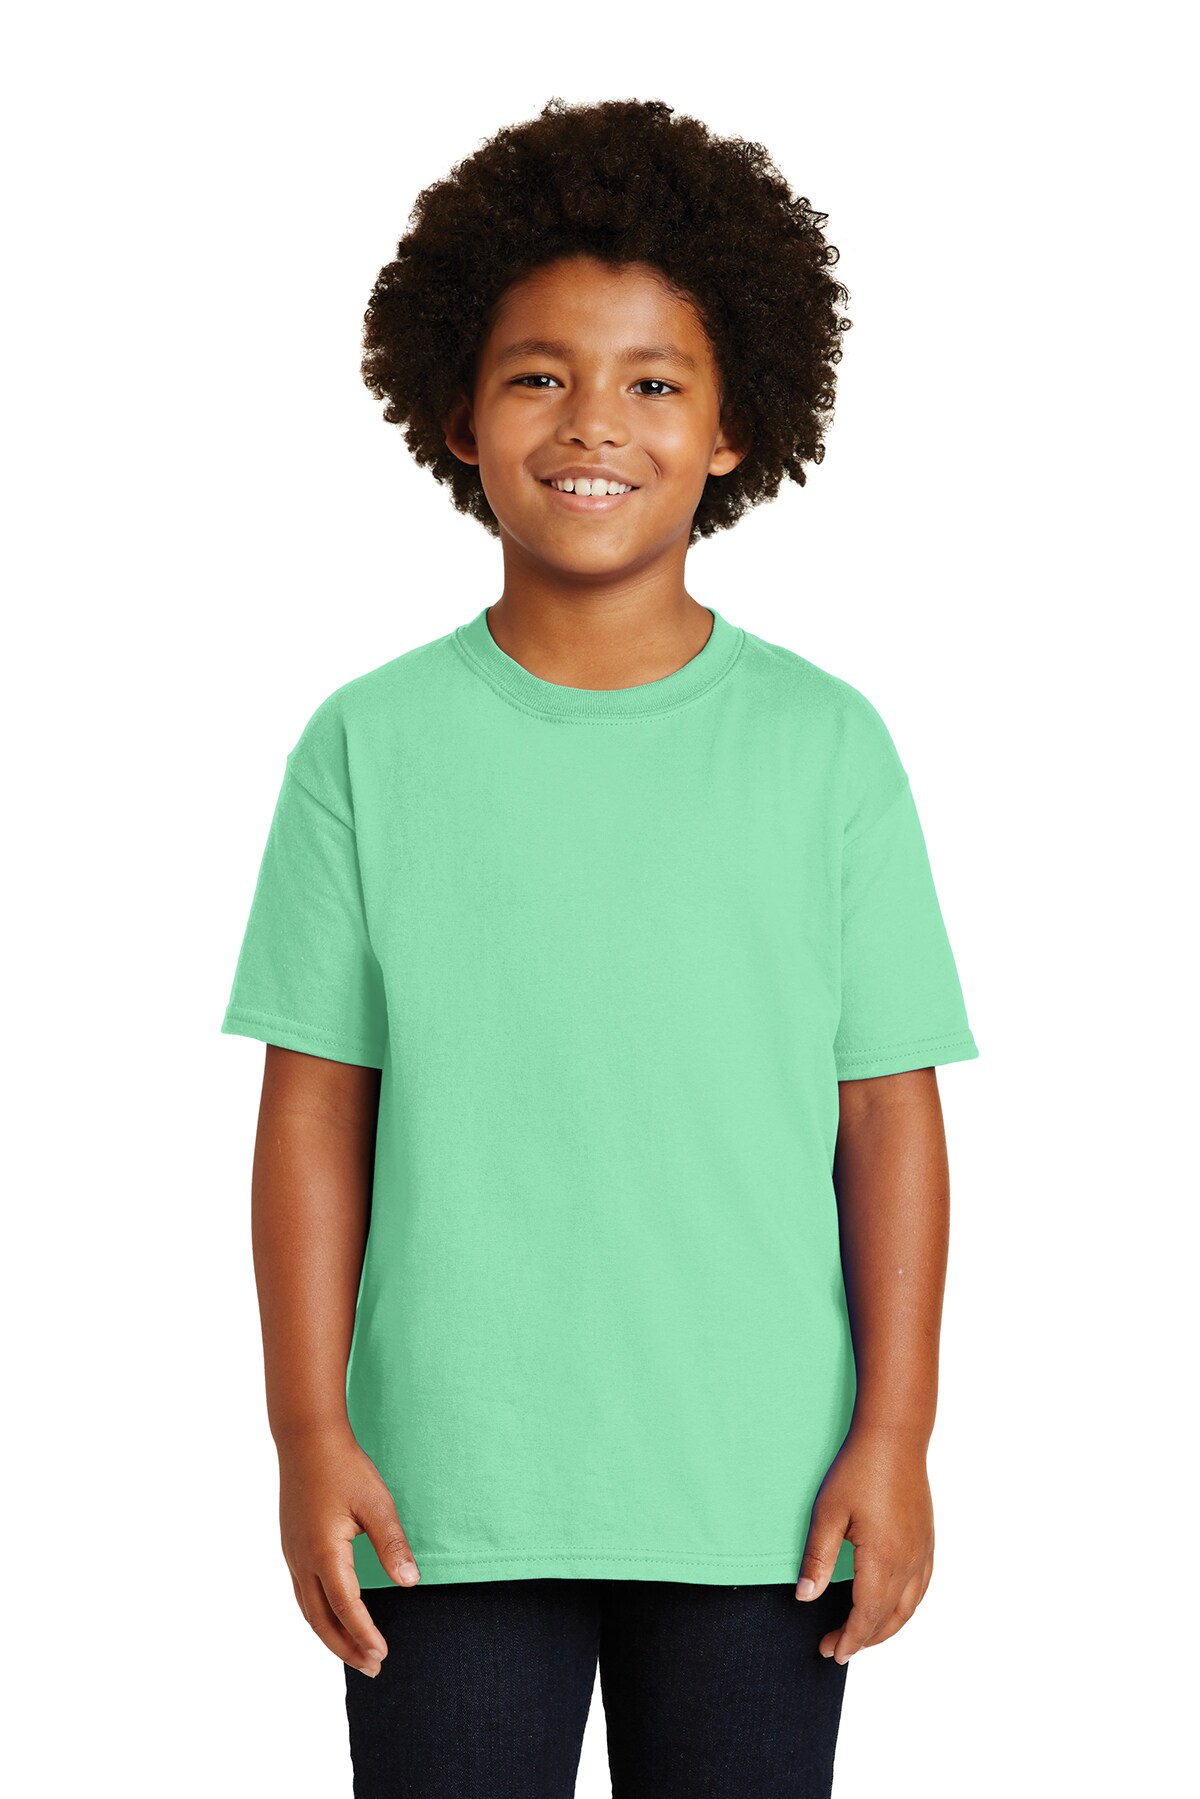 Stylish Premium T-shirt for Kids | RADYAN®